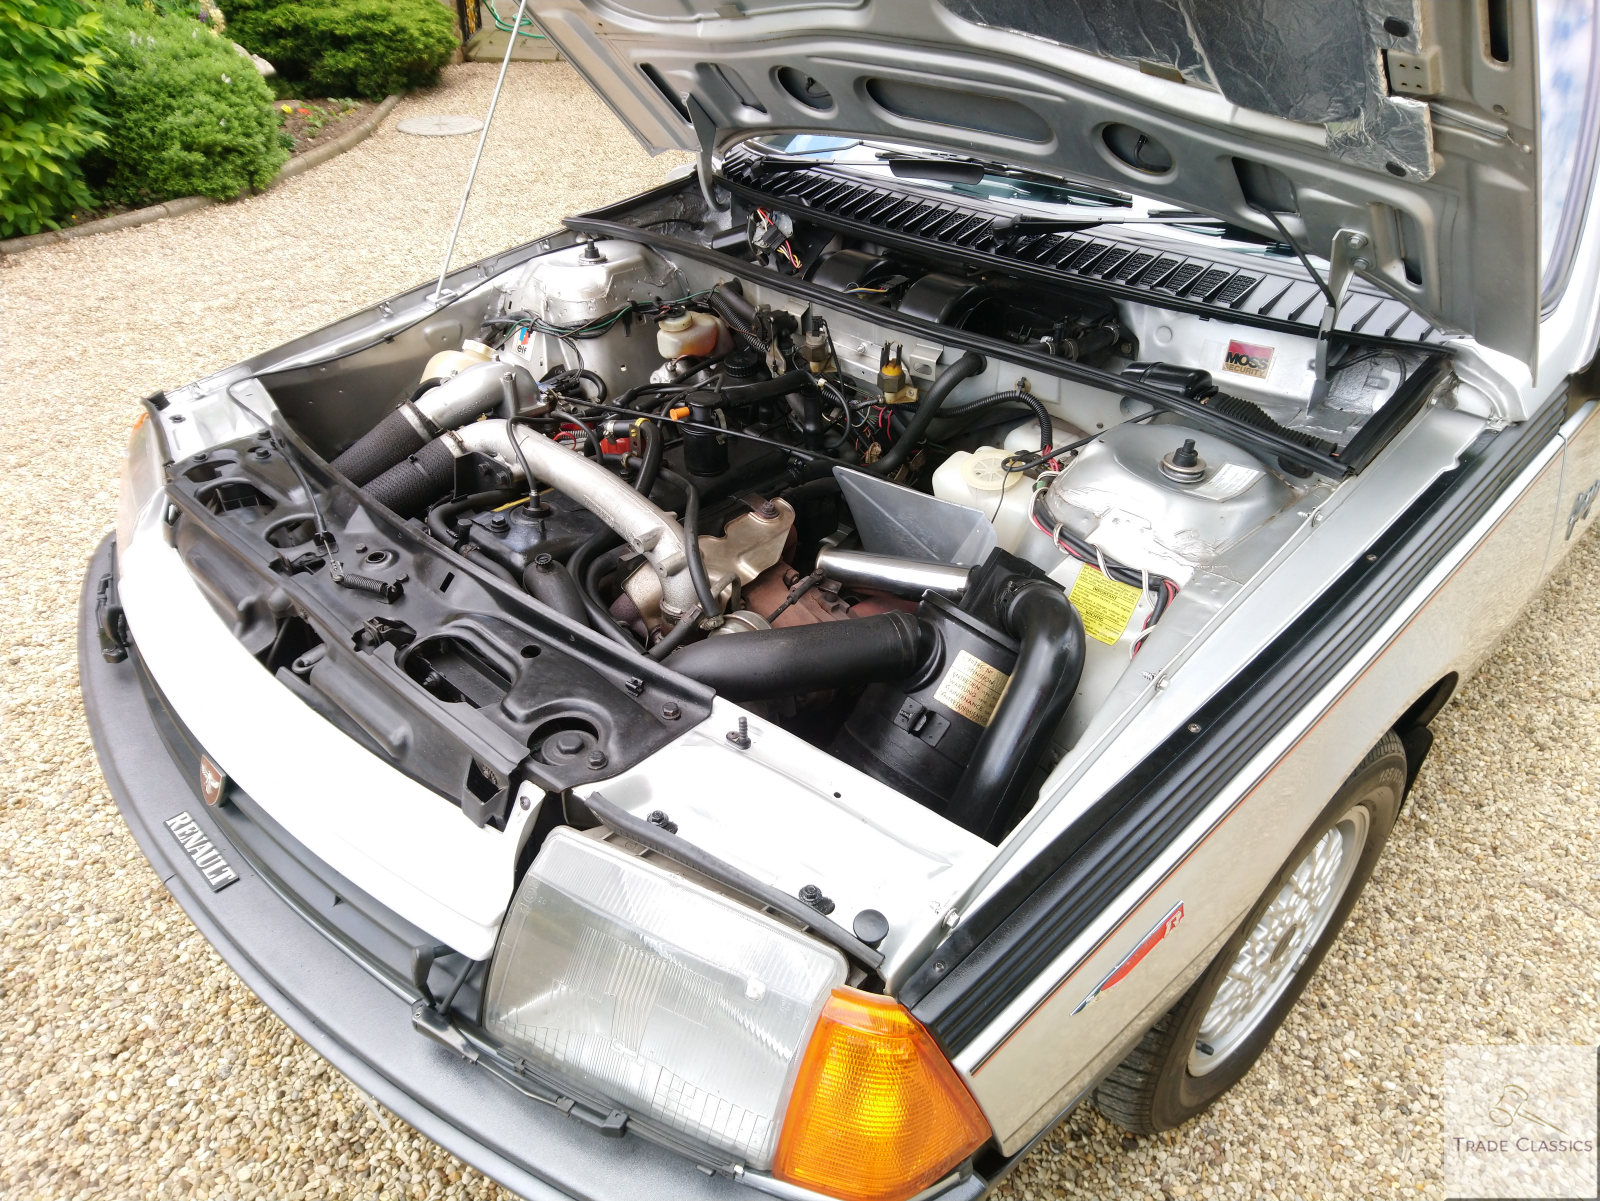 https://www.tradeclassics.com/wp-content/uploads/2019/07/1985-Renault-Fuego-Turbo-900.jpg